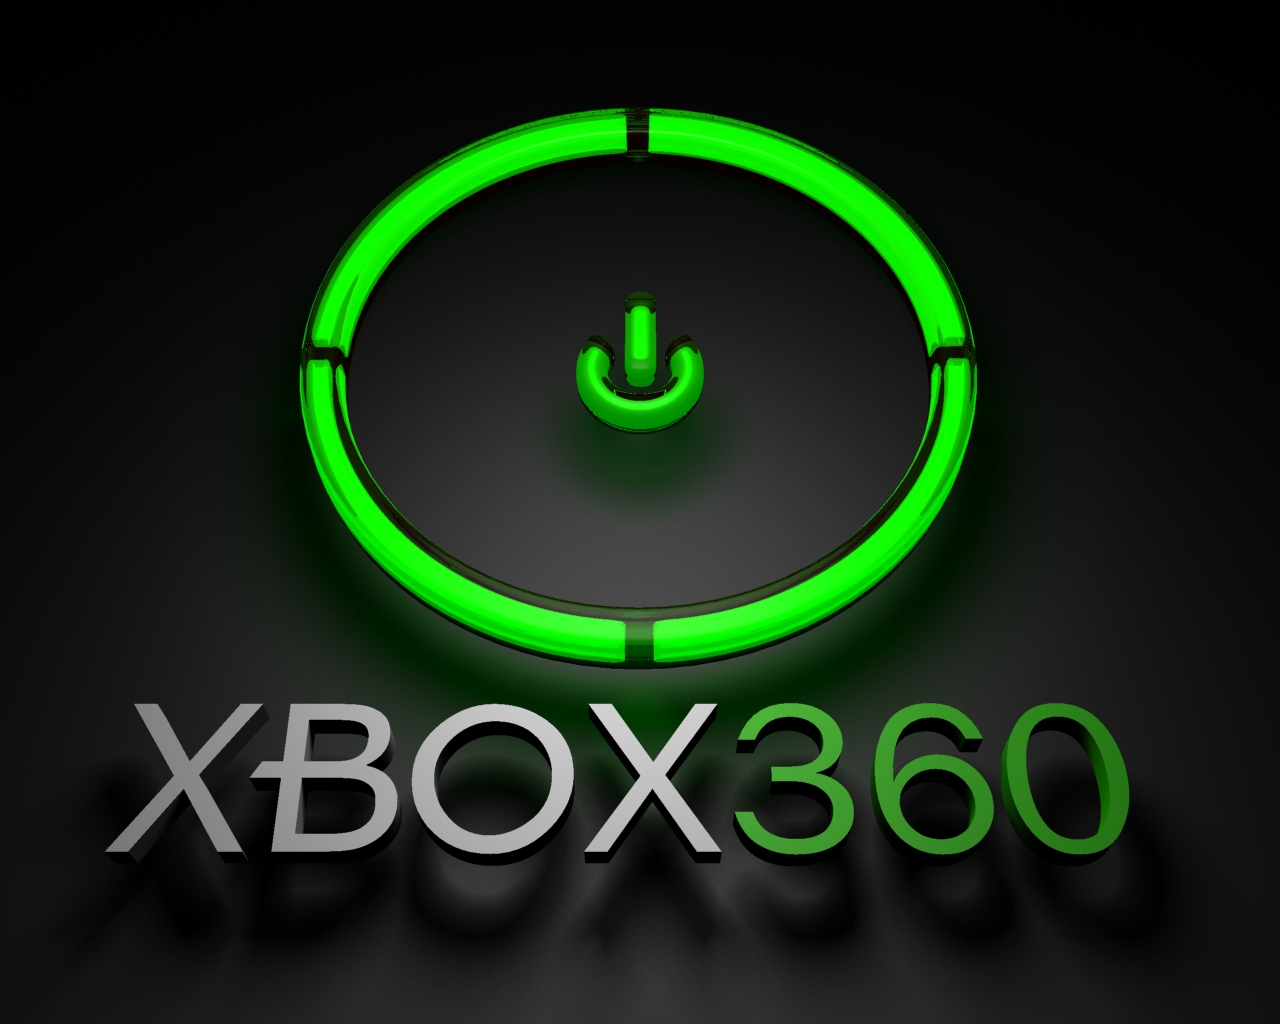 xbox 360 green ring power title wallpaper background desktop logo 1280x1024